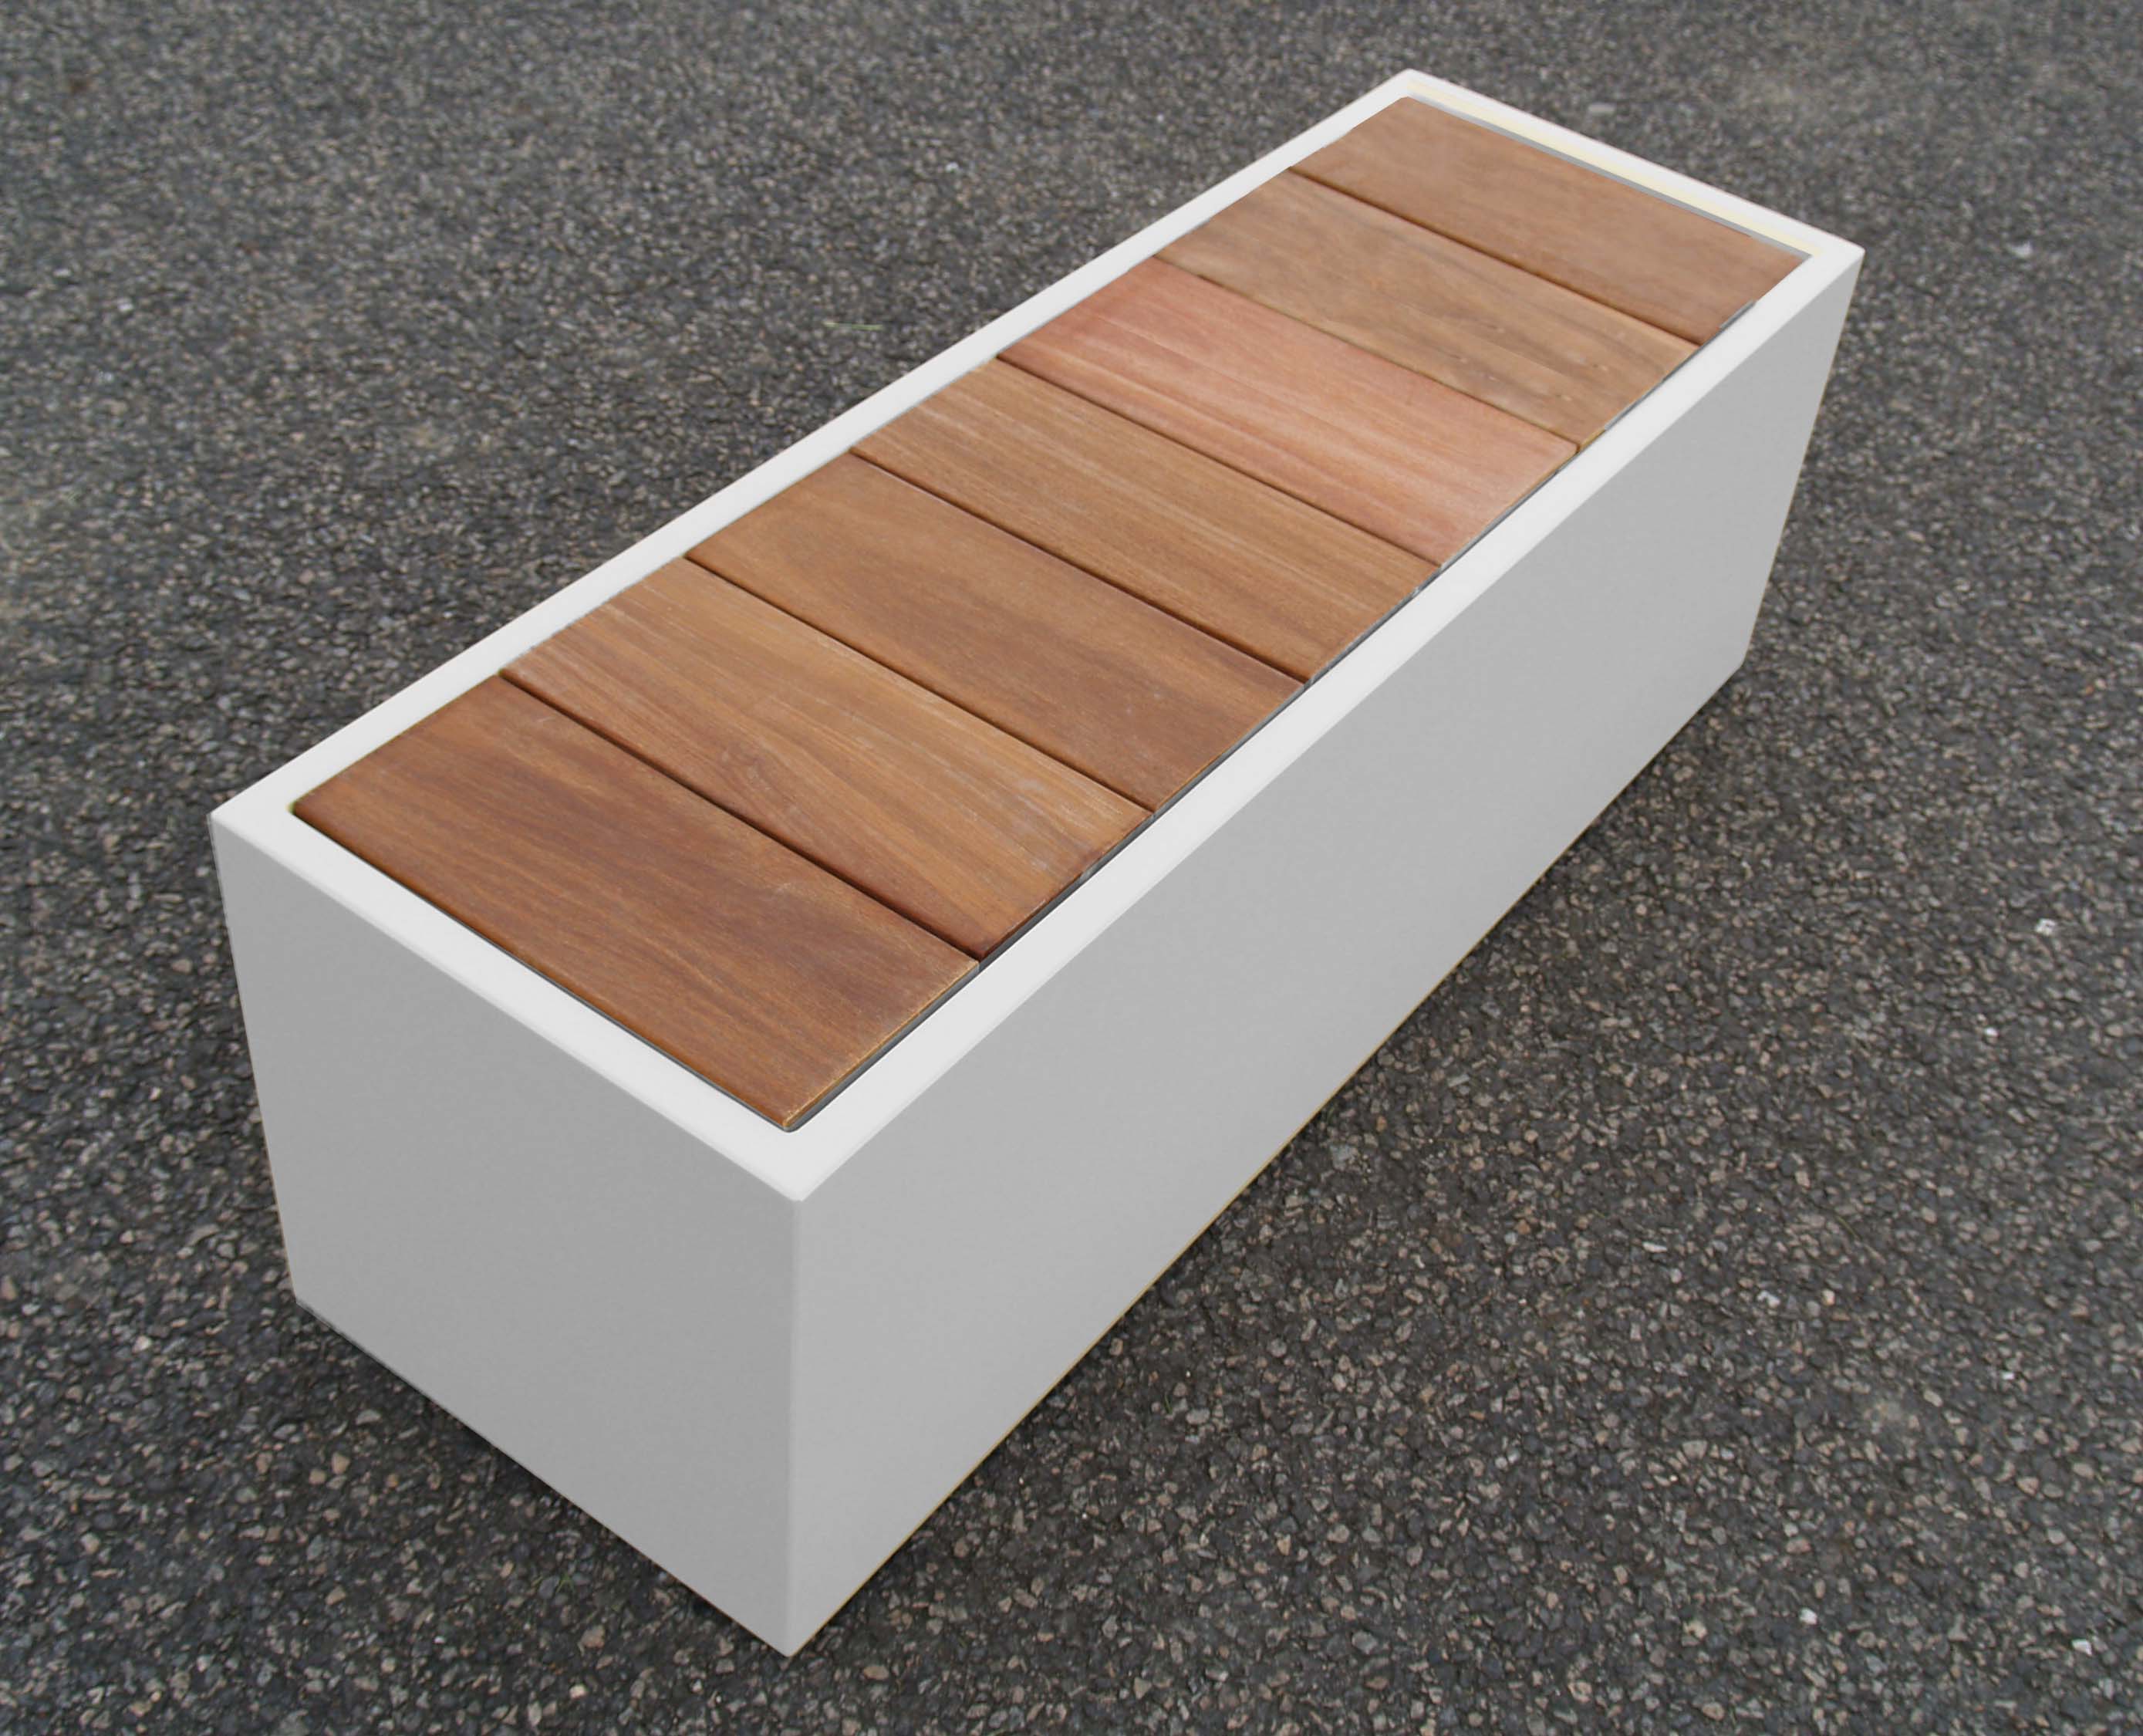 Bench - Garden chest - Wooden cover "Embedded" - Transverse wooden slats